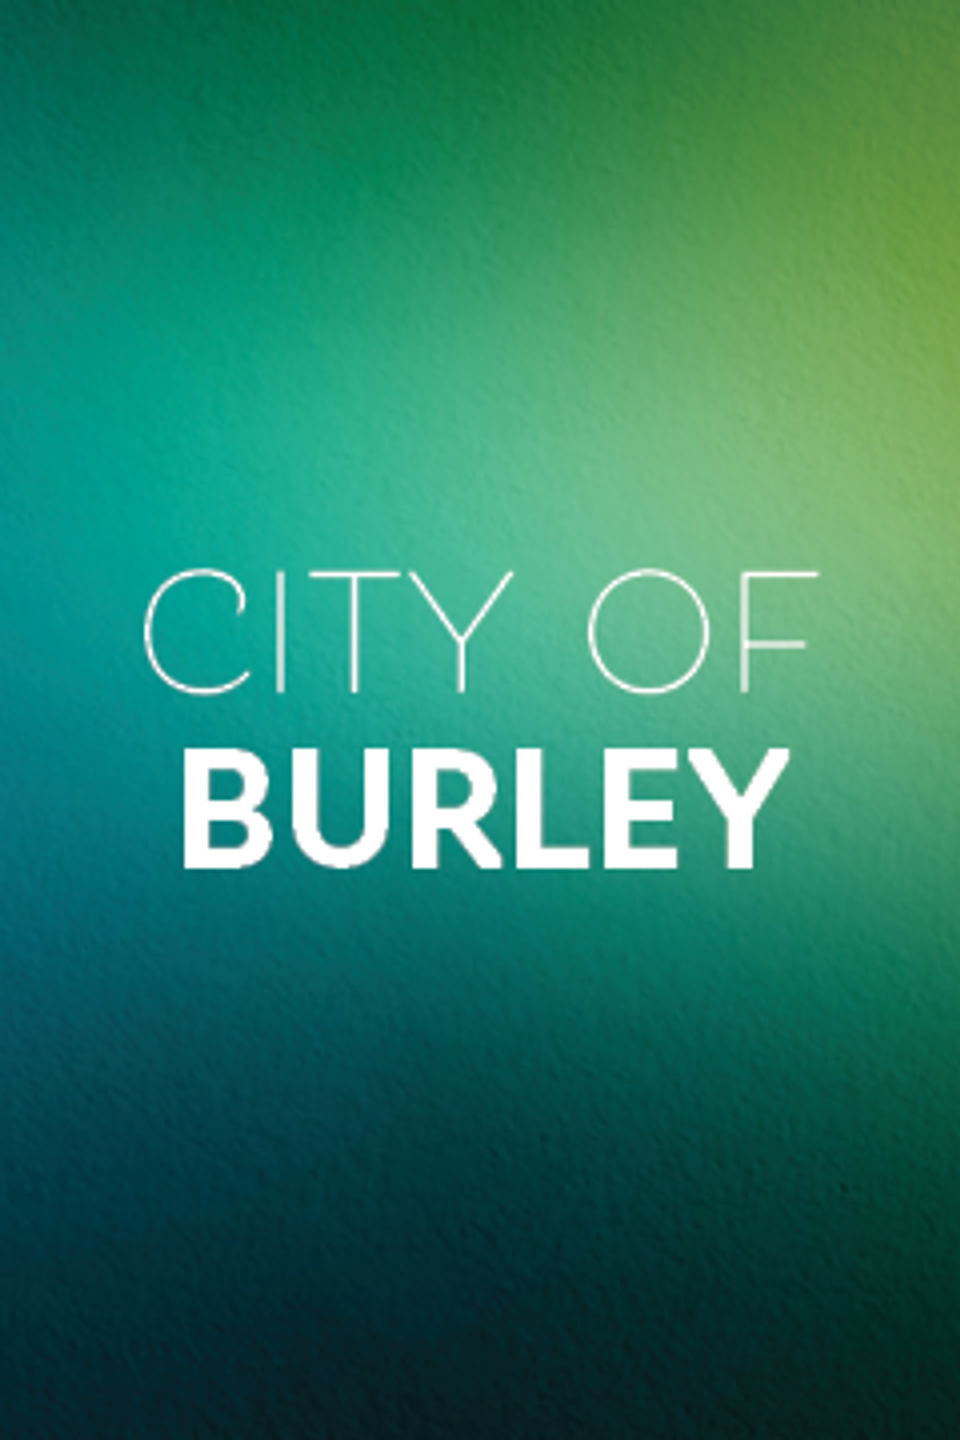 City of burley